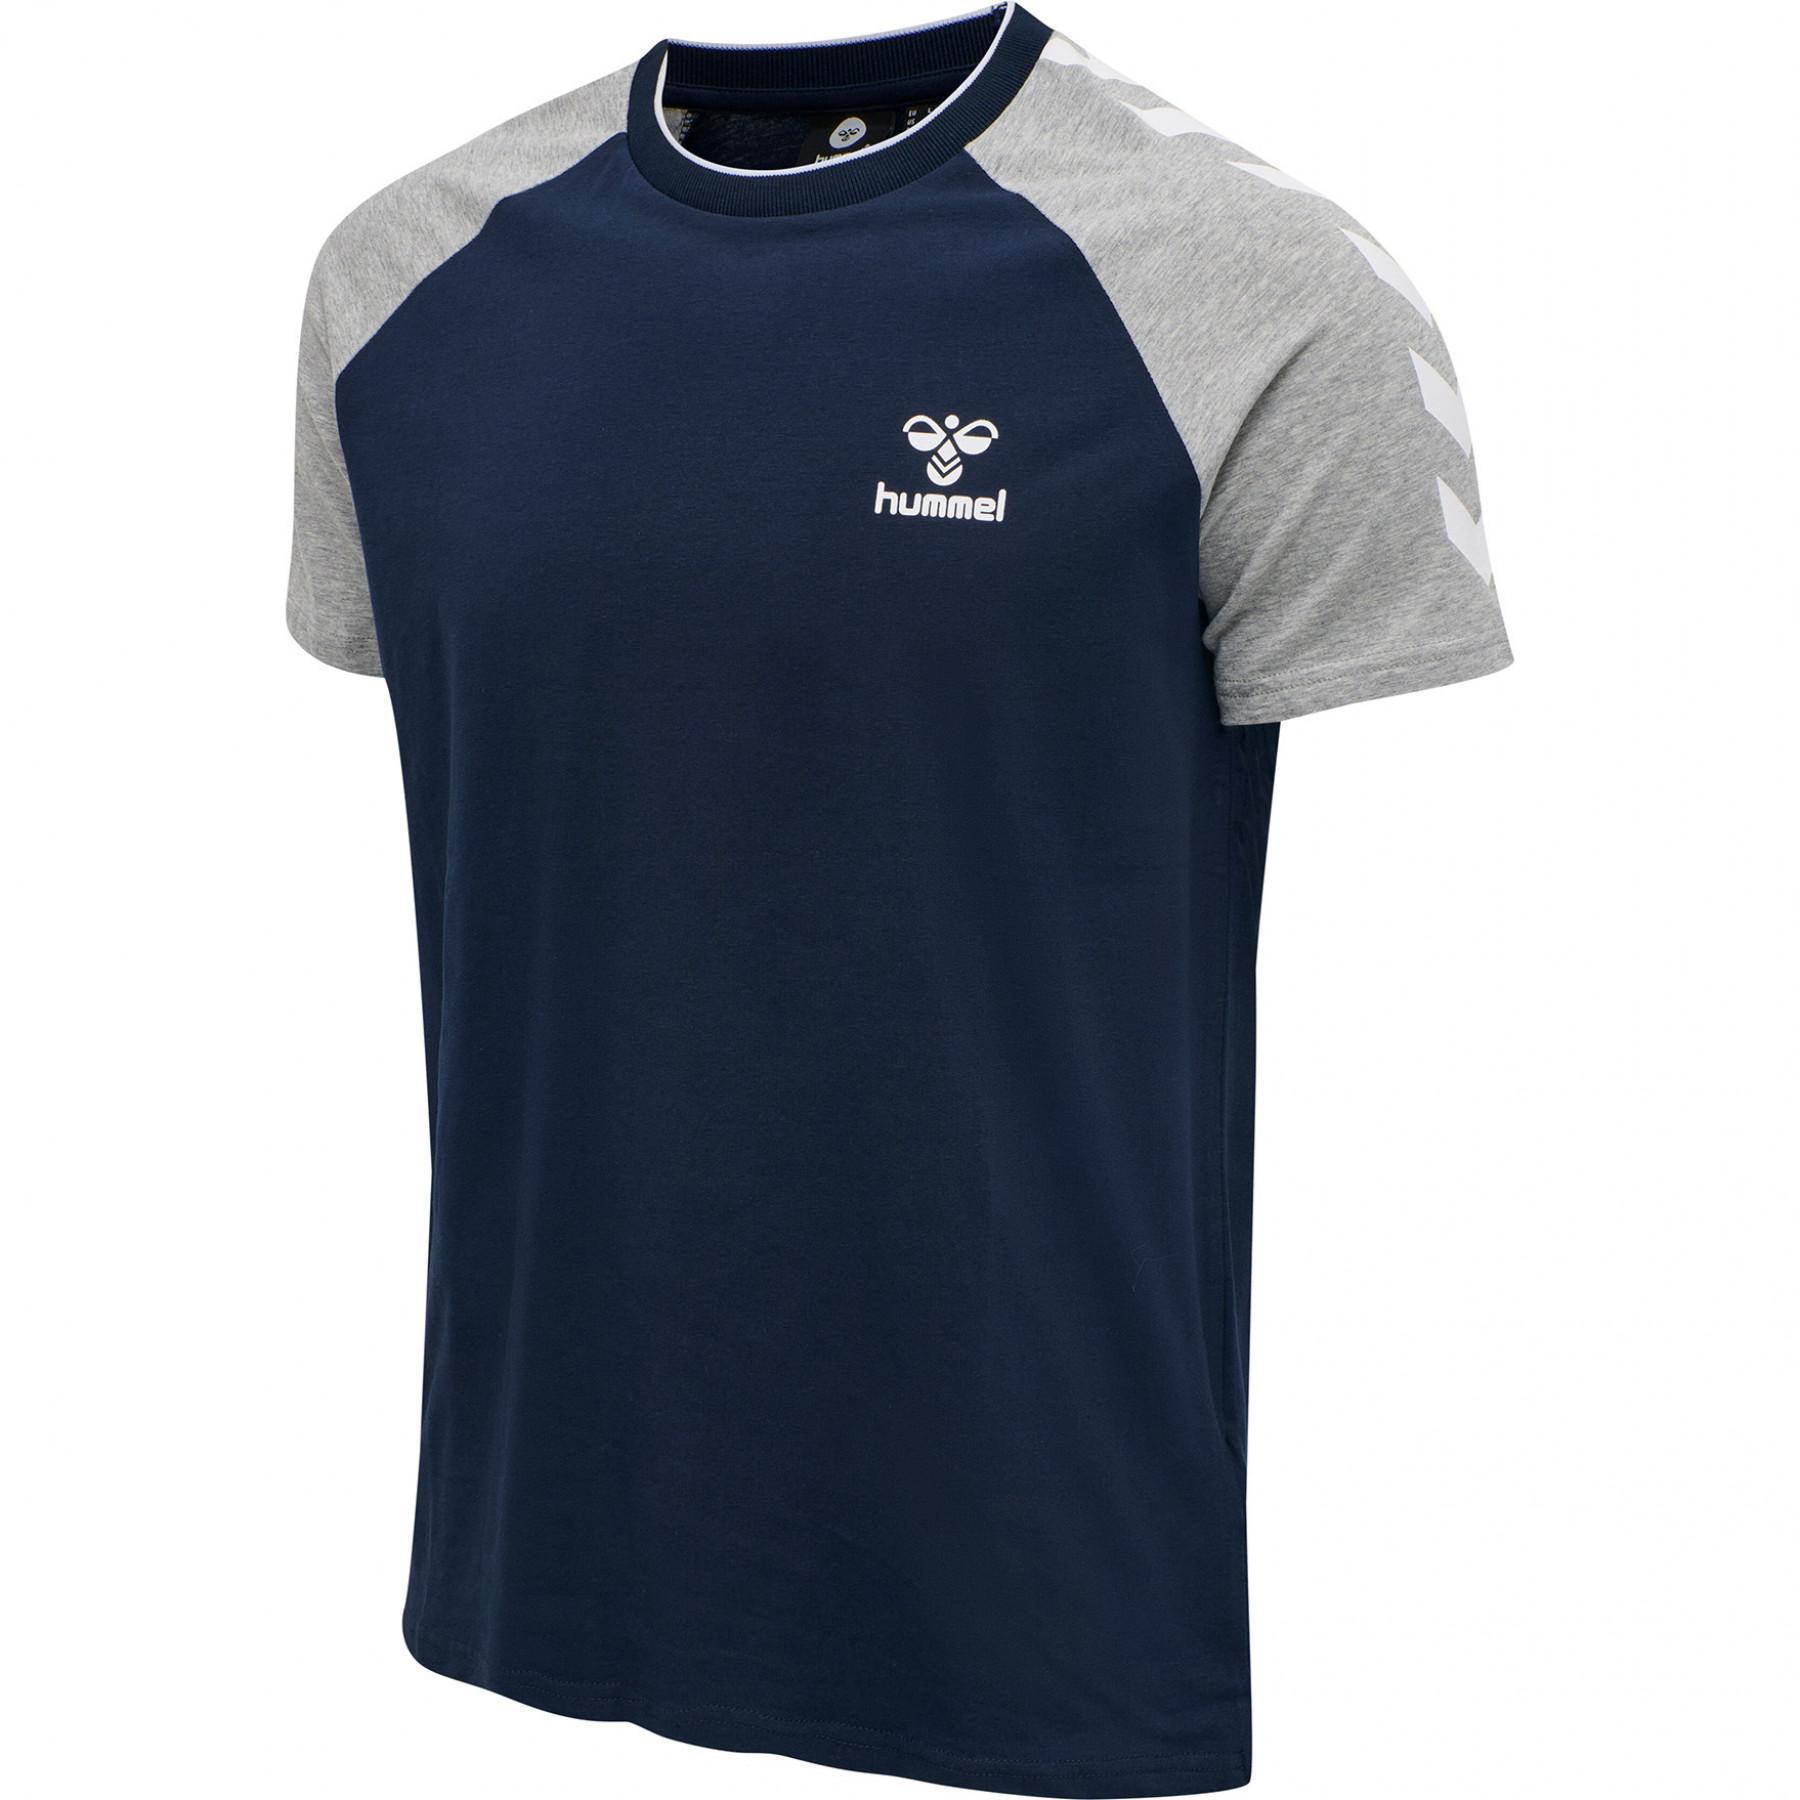 T-shirt Hummel wear - and Textile - polos hmlmark Handball - T-shirts